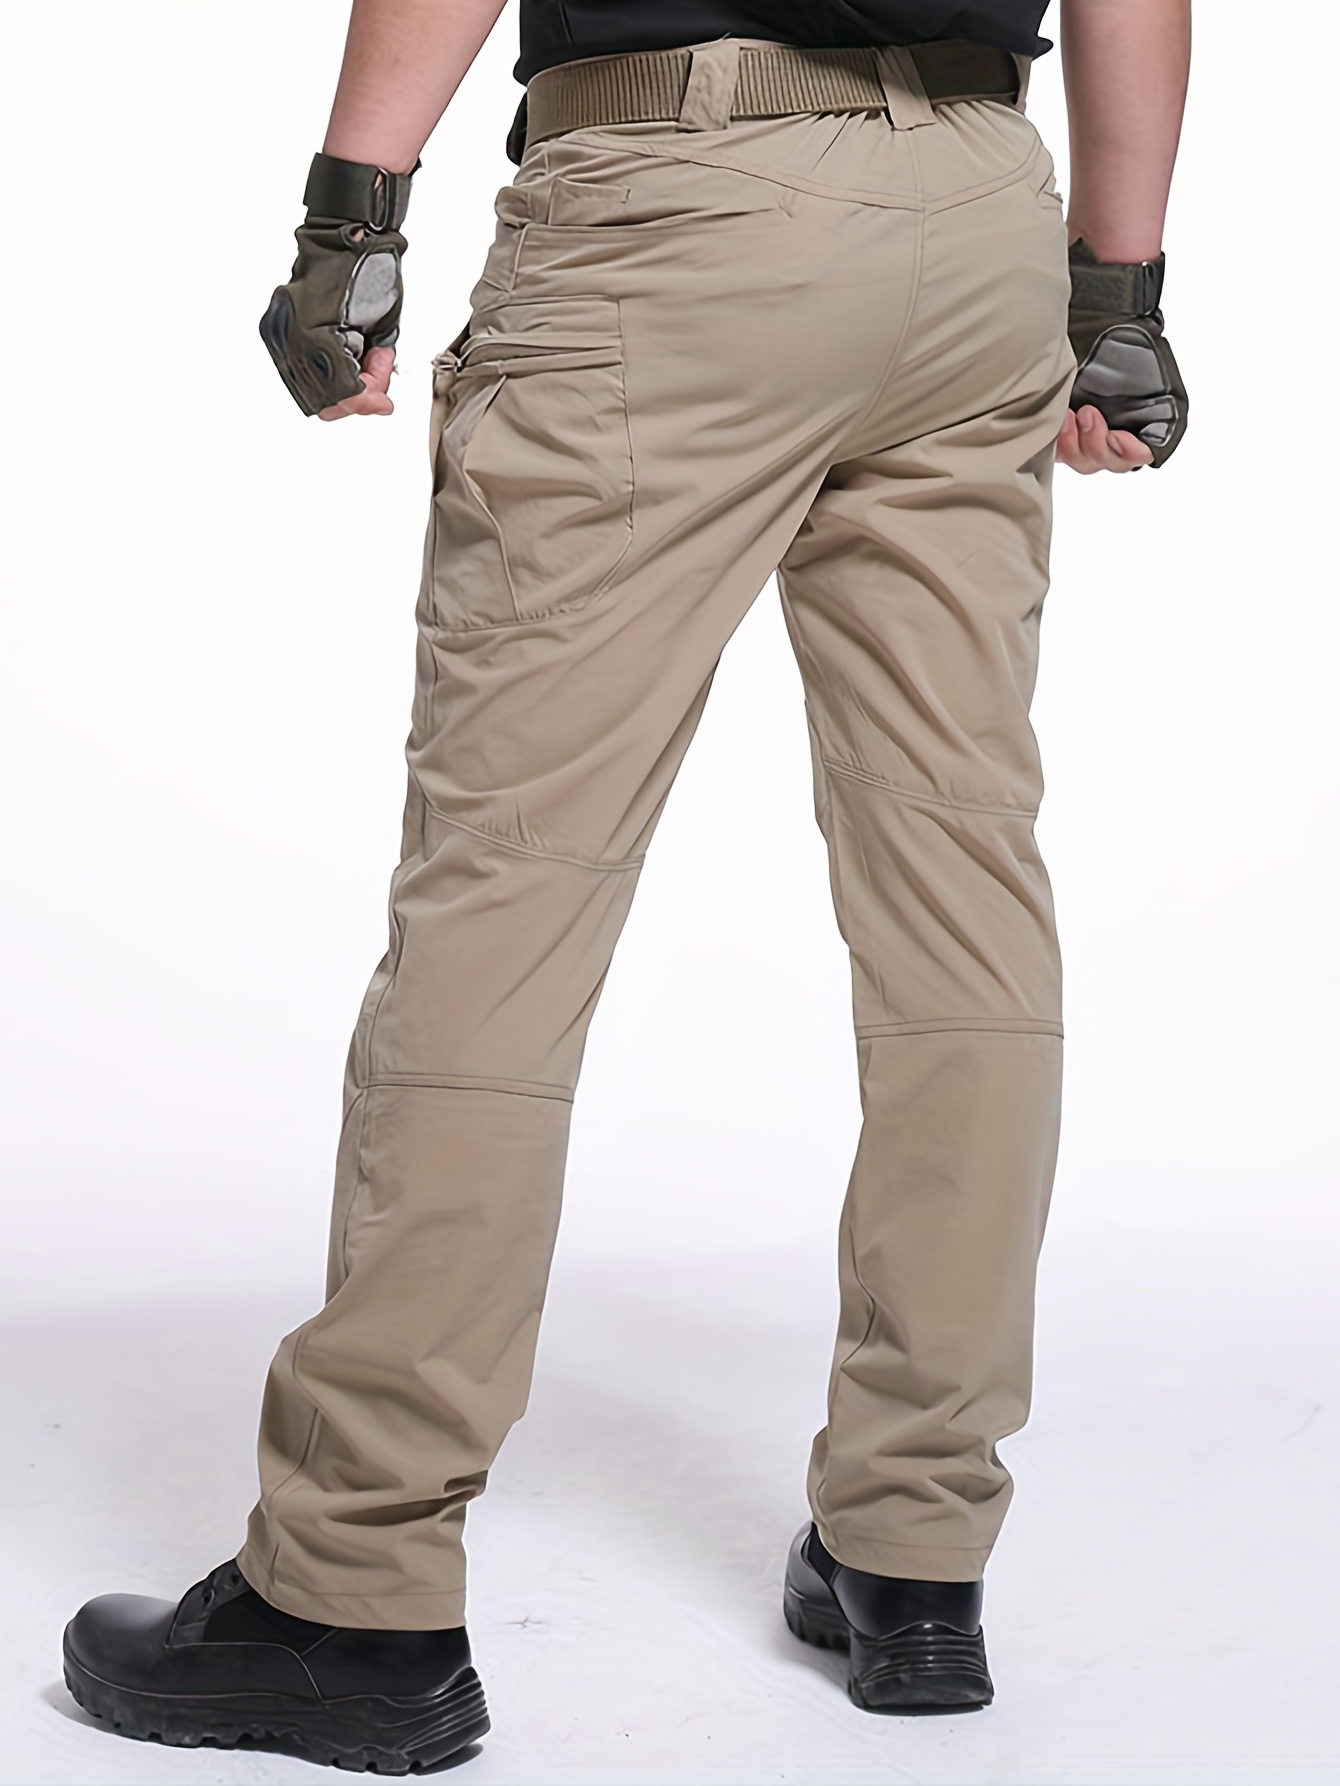 Multi Pocket Men's Tactical Pants Loose Casual Outdoor Pants